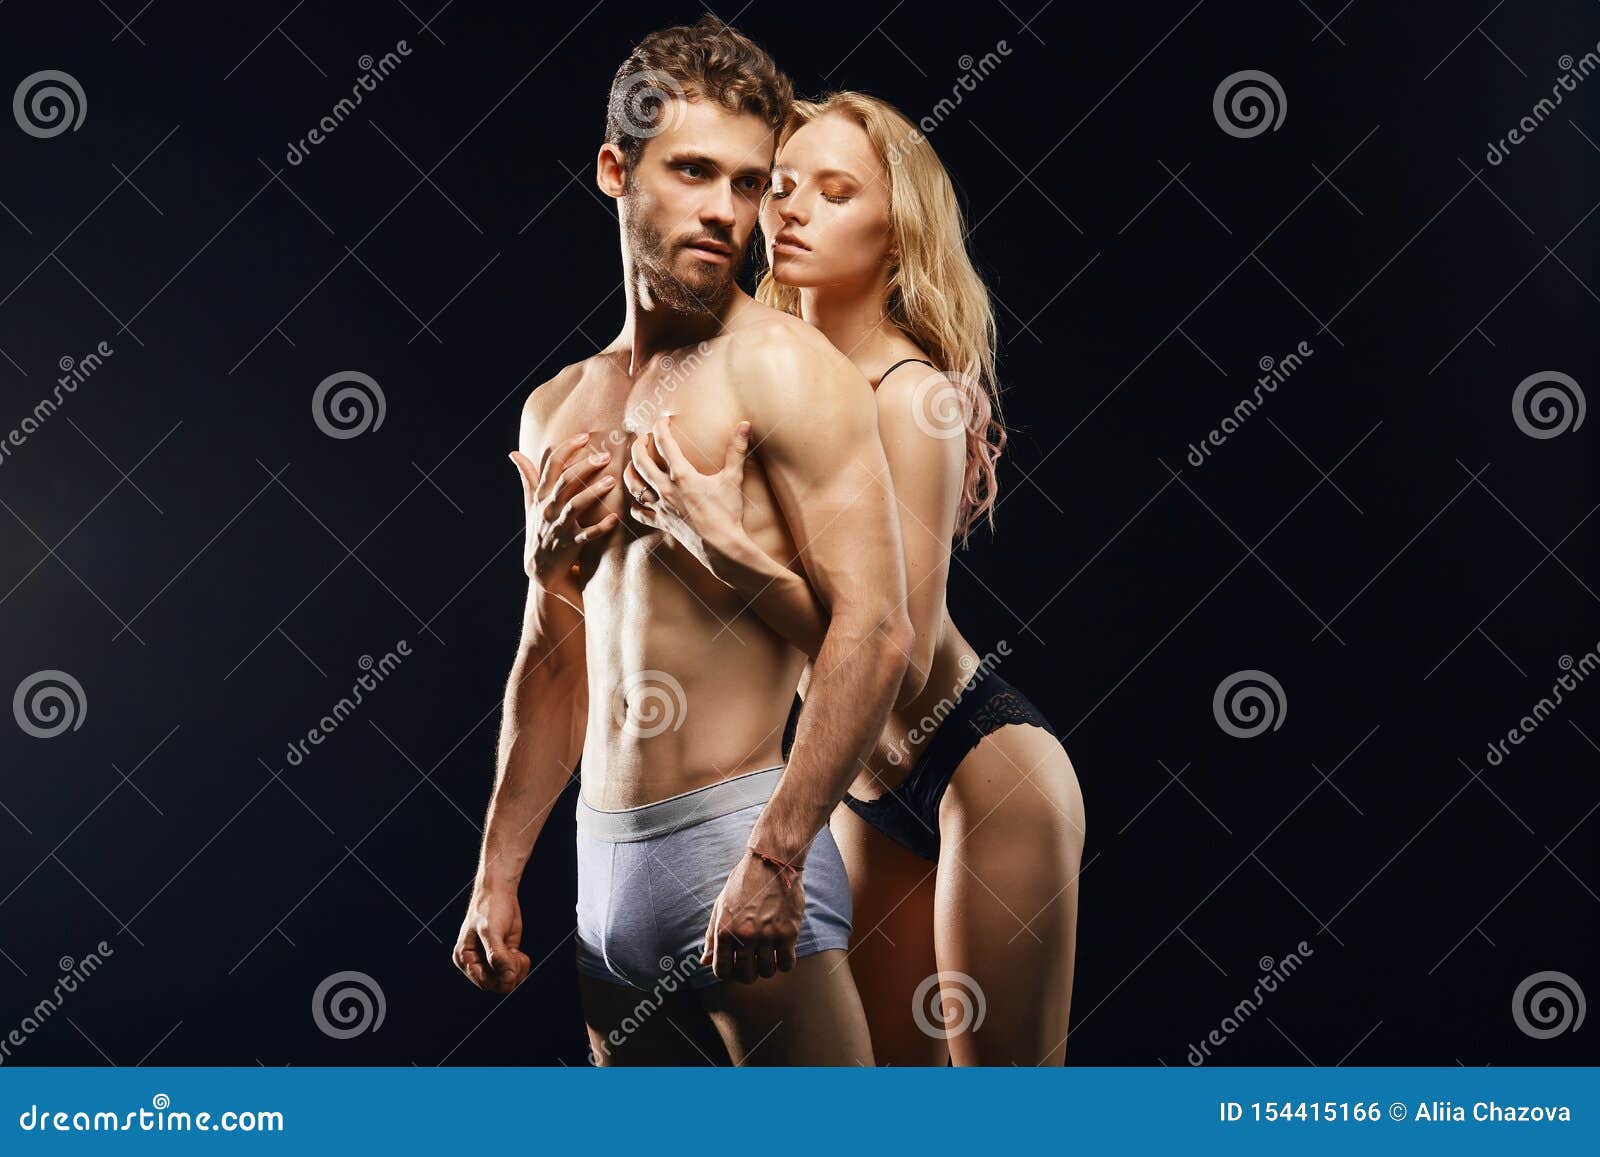 Black muscle guys hot girls Girl Touching Her Man S Slim Muscular Body Stock Photo Image Of Passion Girlfriend 154415166